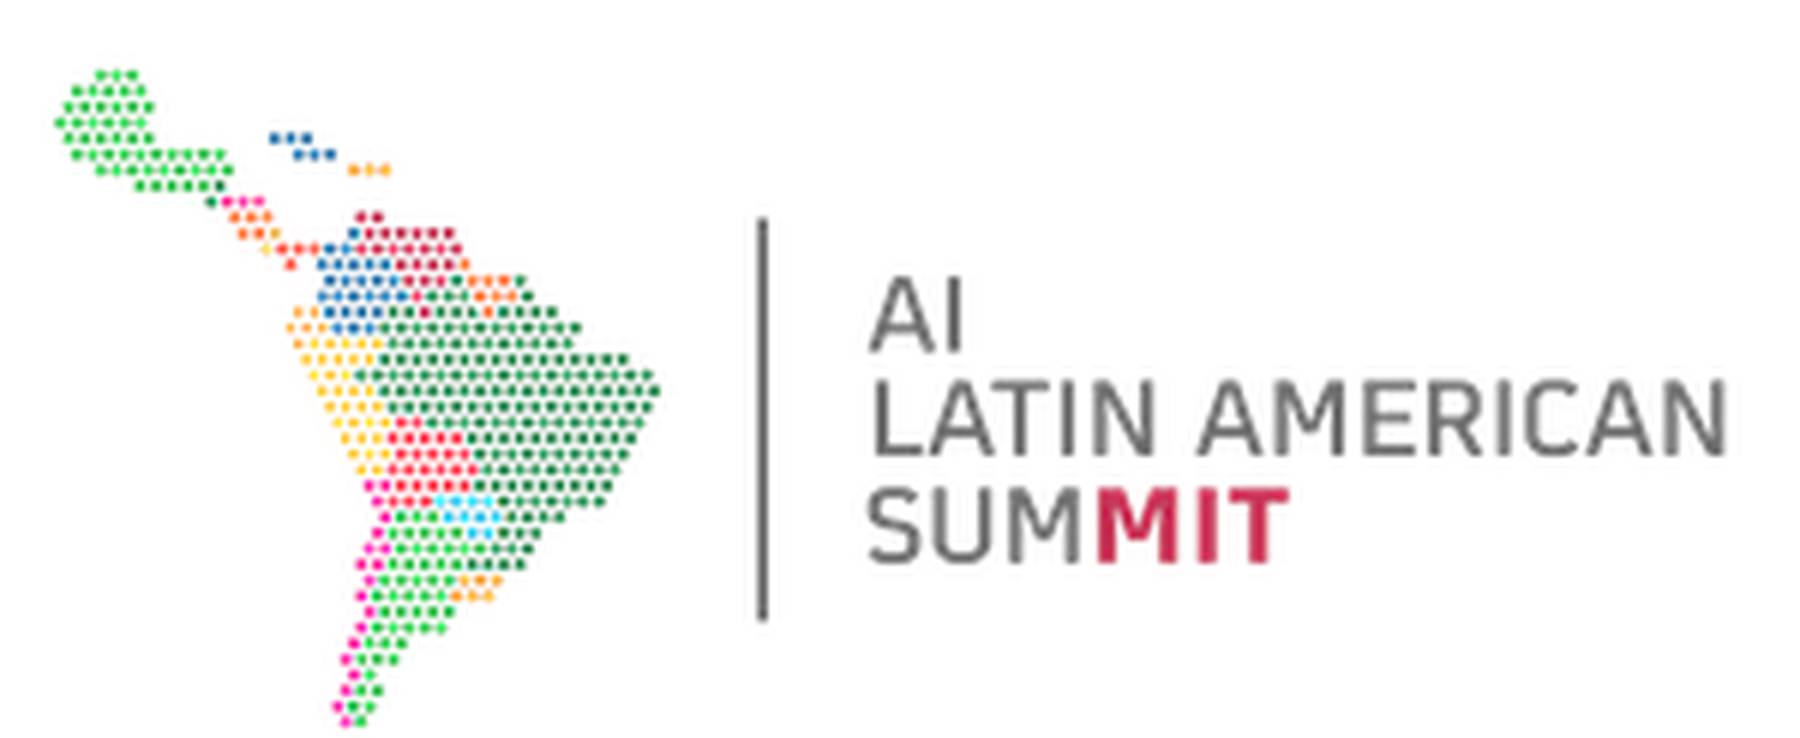 AI Latin America SumMIT Cambridge 2020